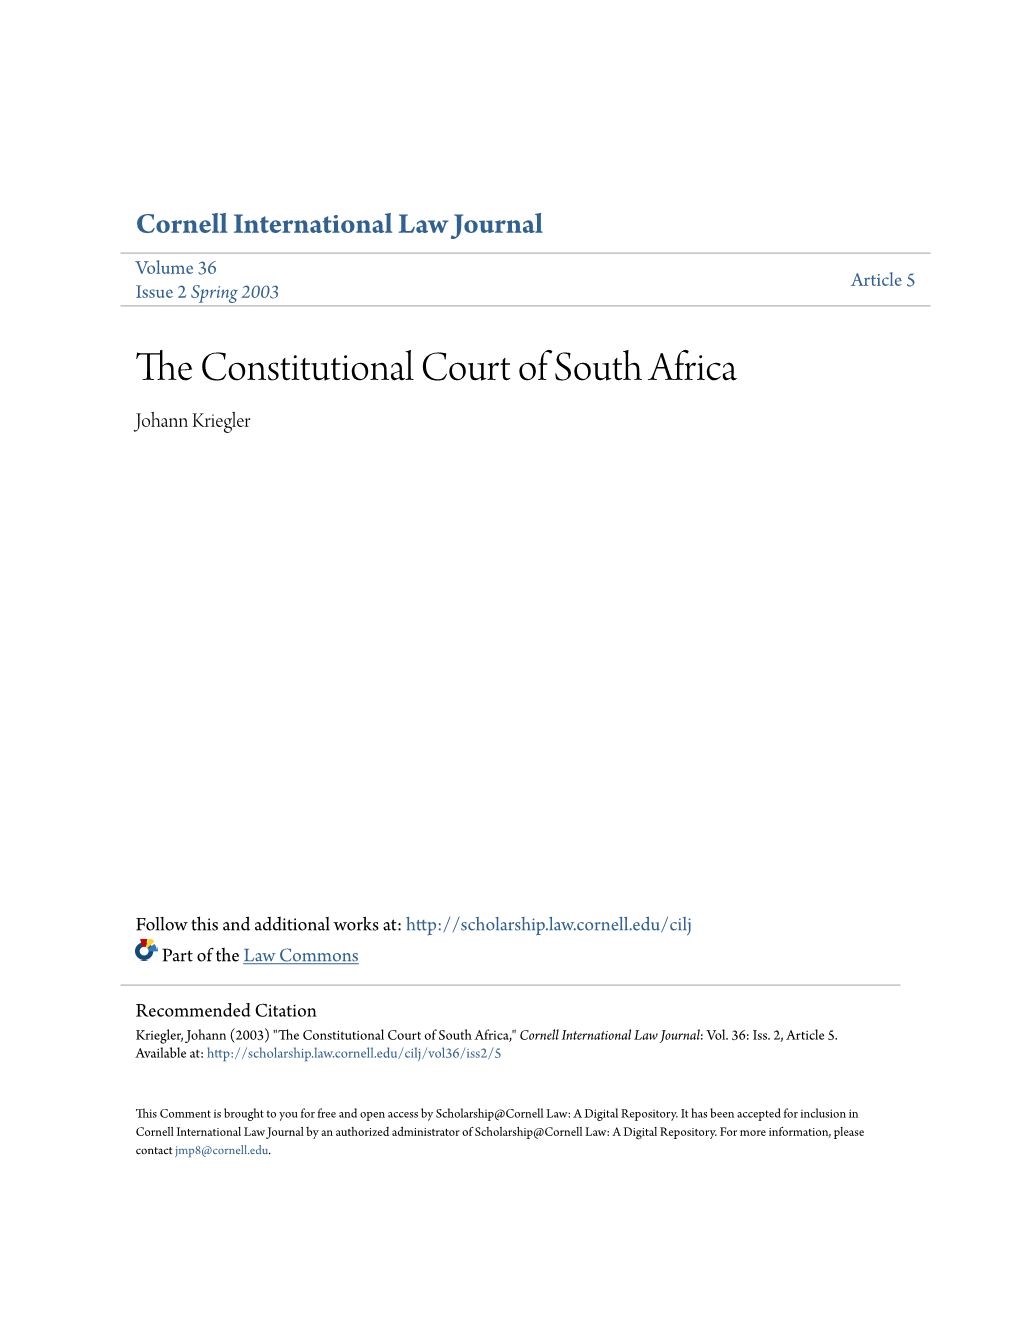 The Constitutional Court of South Africa Johann Kriegler